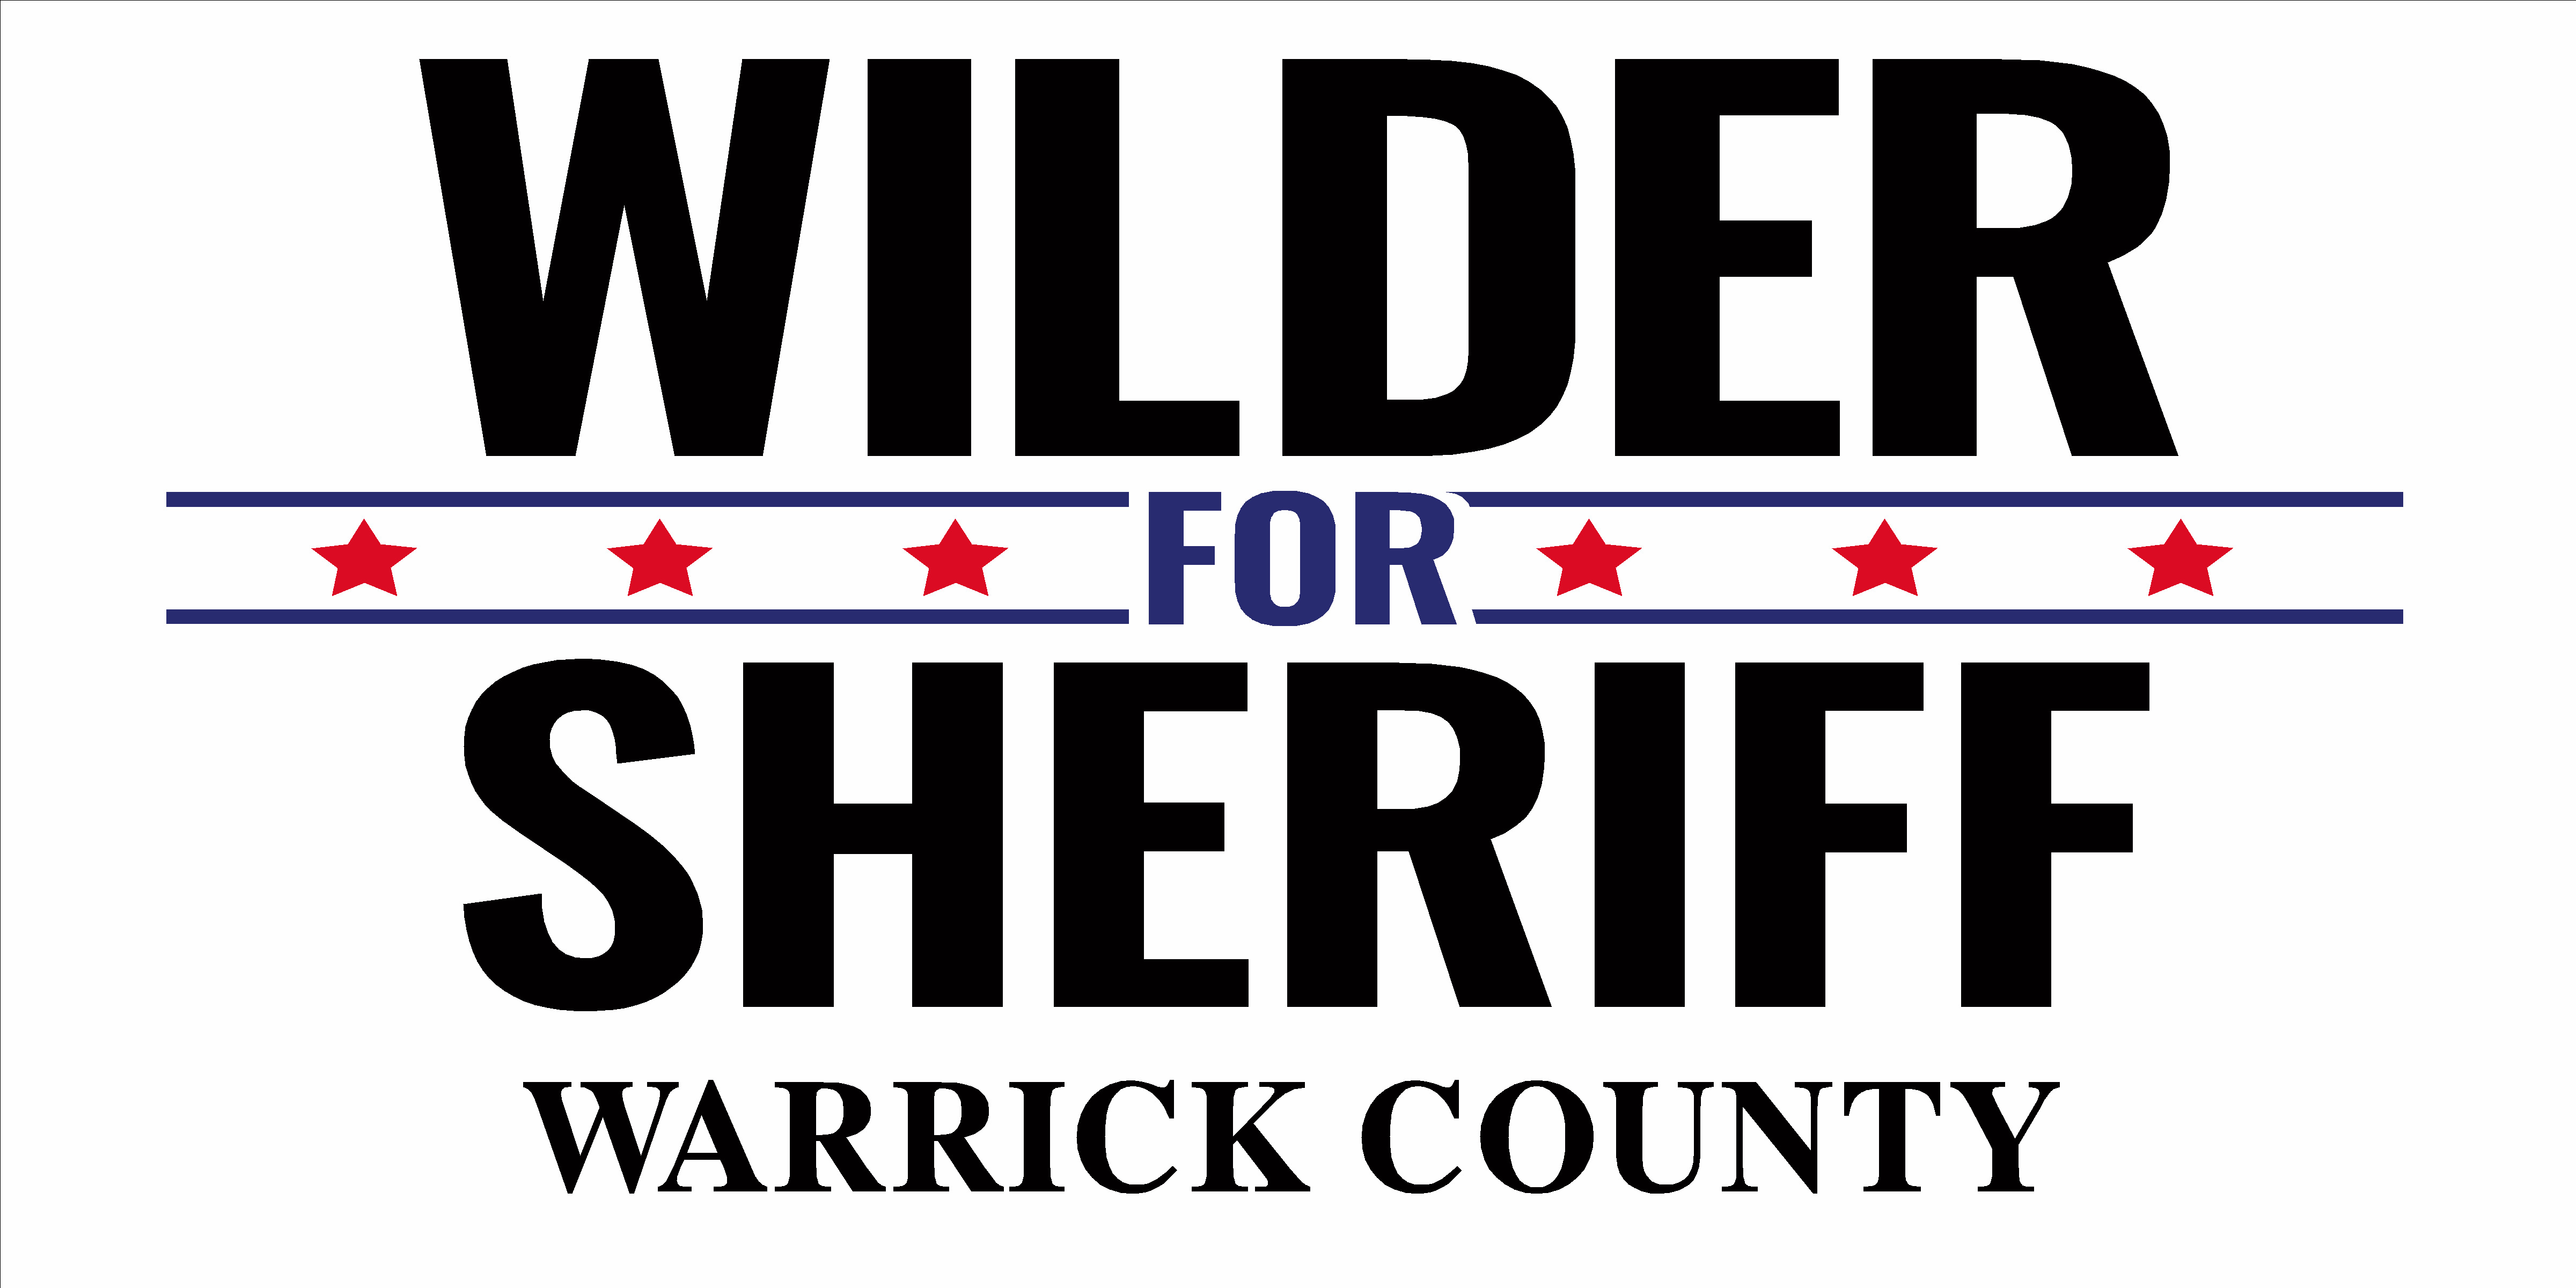 Mike-Wilder-Warrick-Sheriff